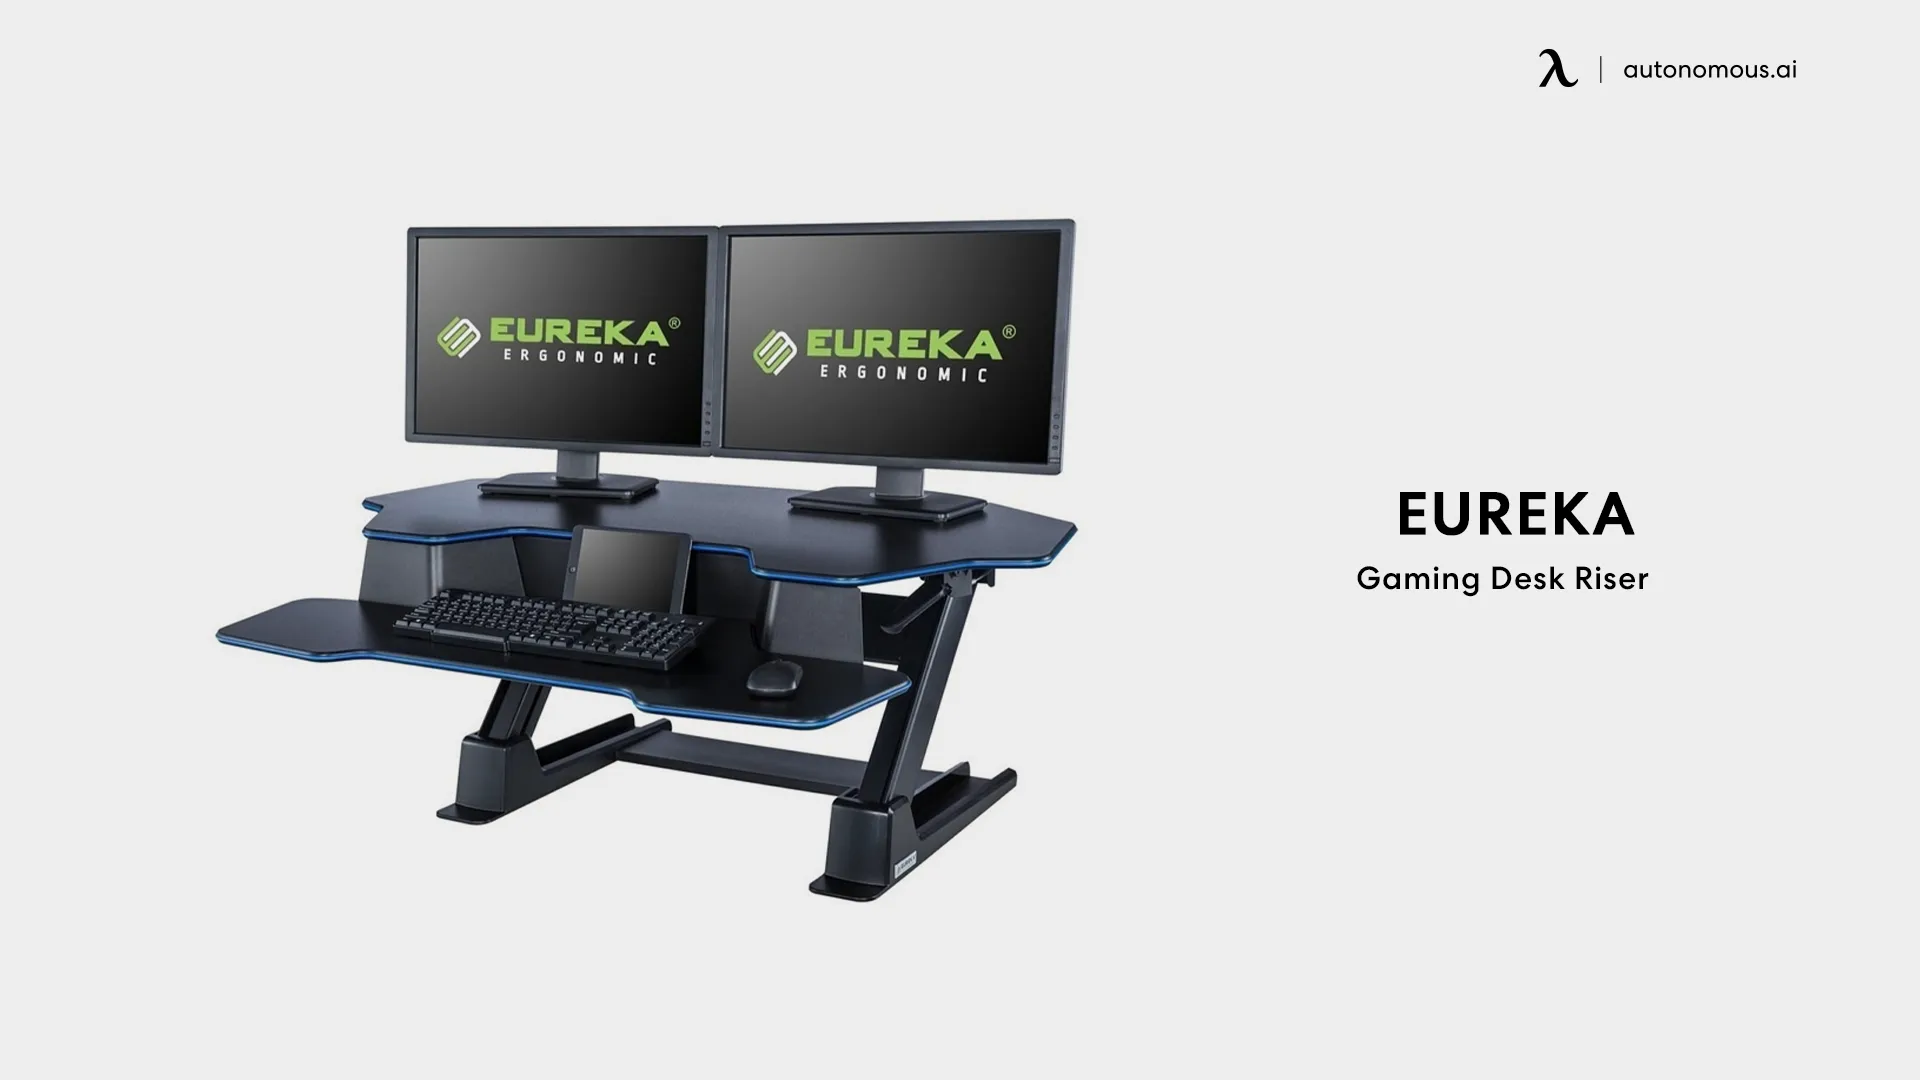 Gaming Desk Riser by Eureka 46